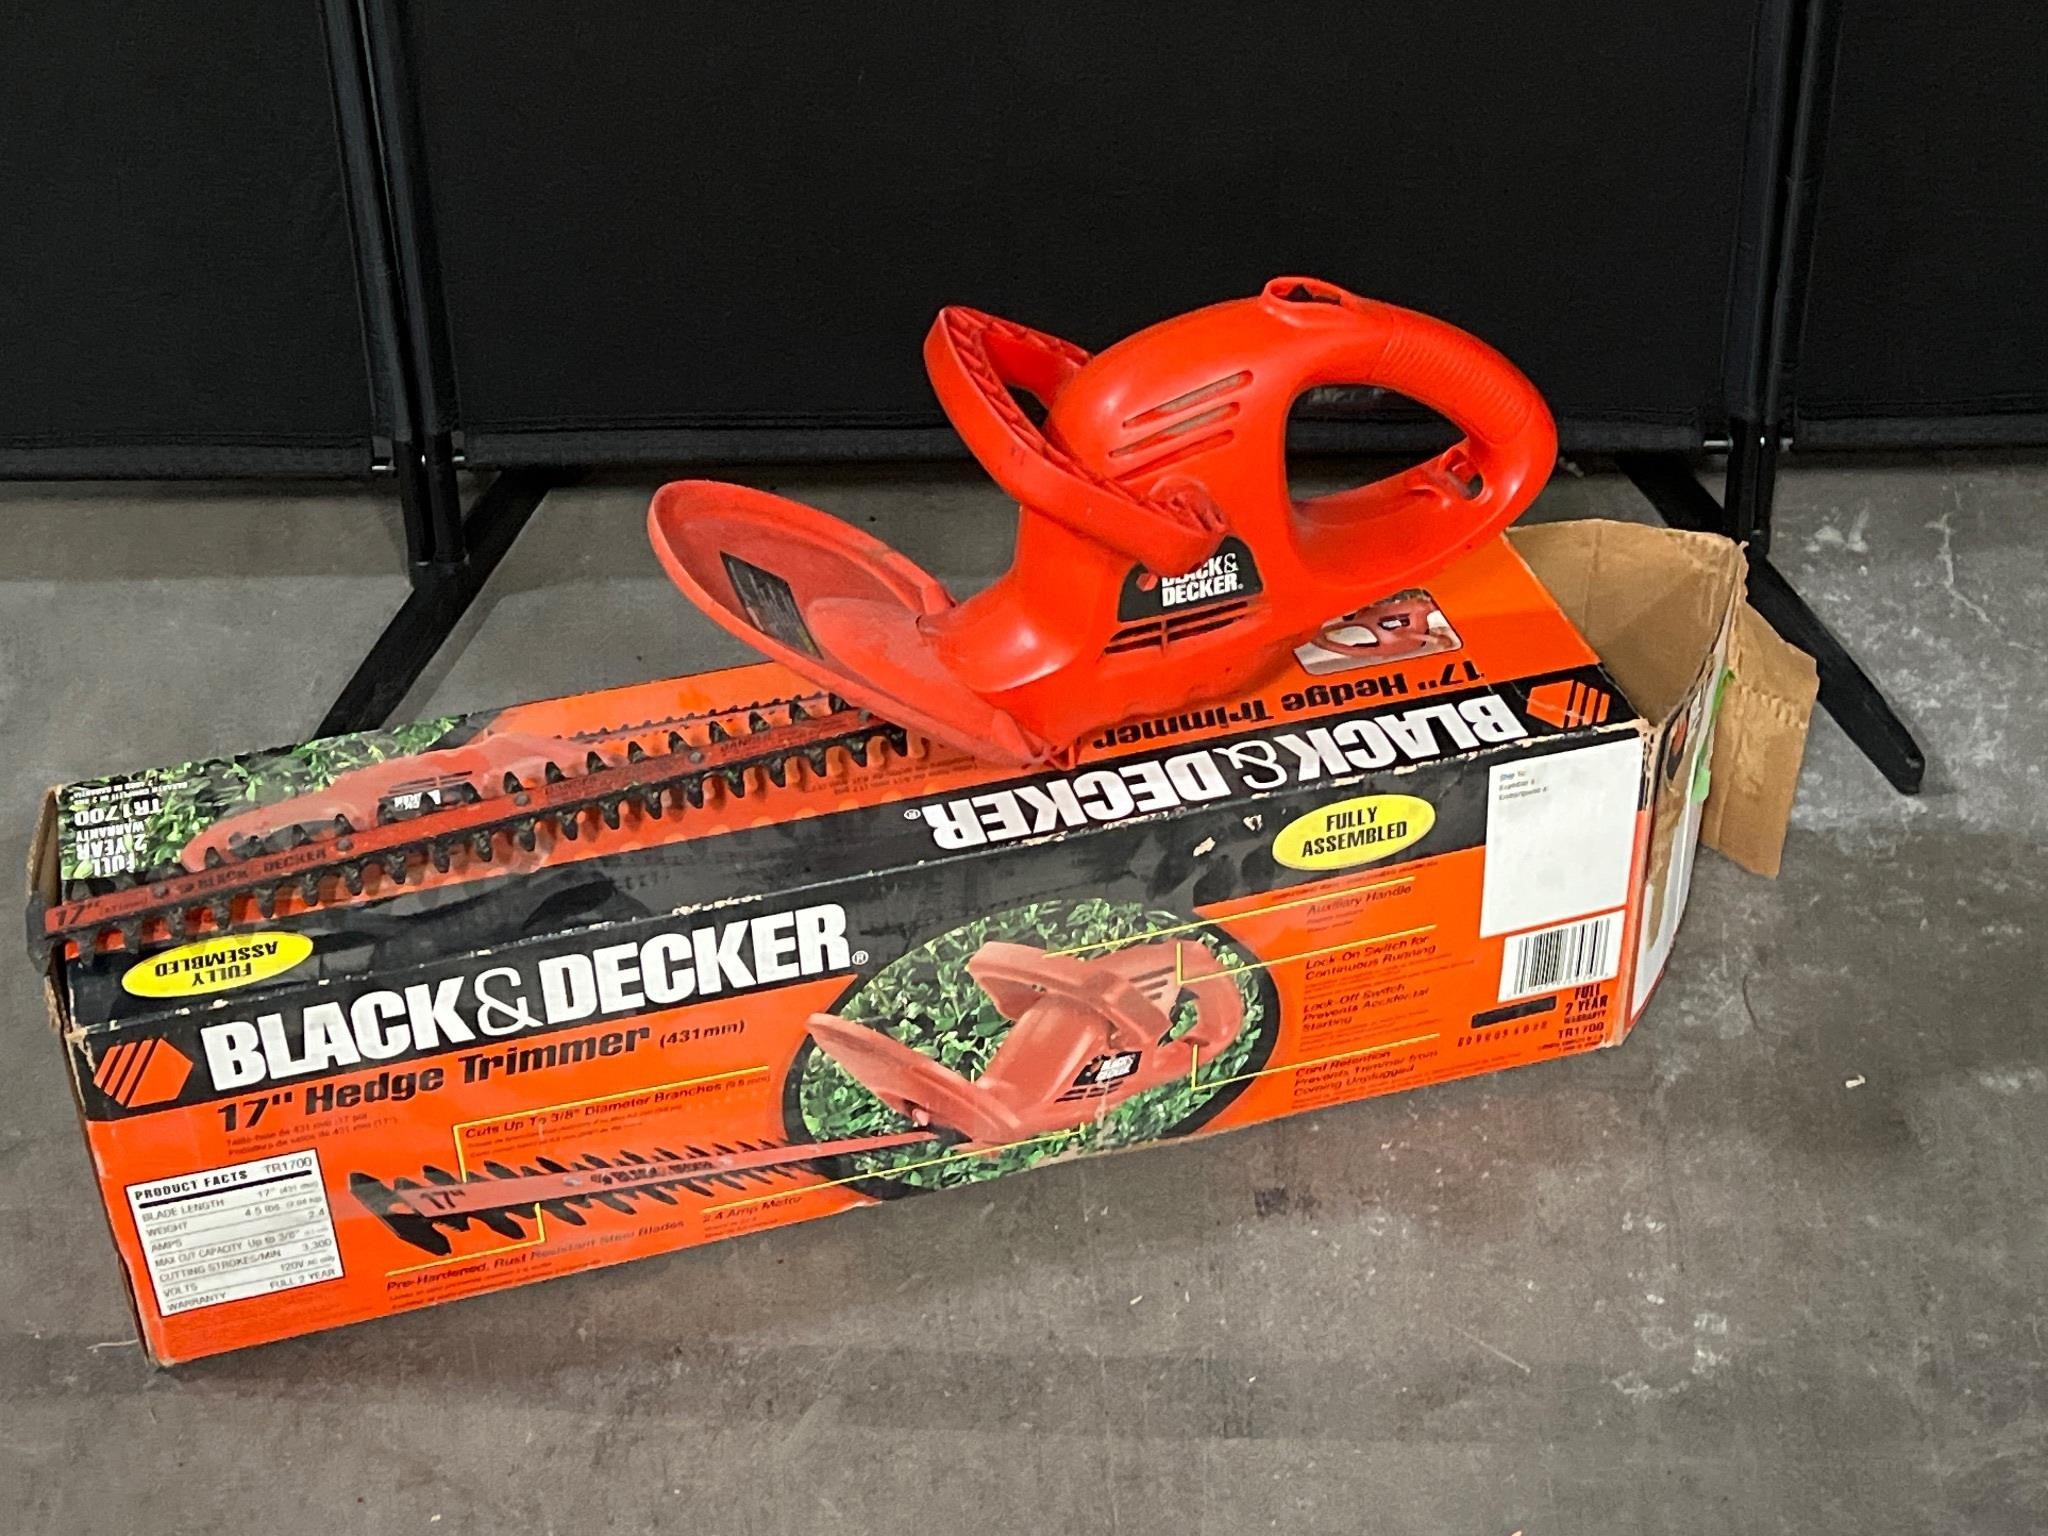 BLACK & DECKER 17” HEDGE TRIMMER W/ BOX